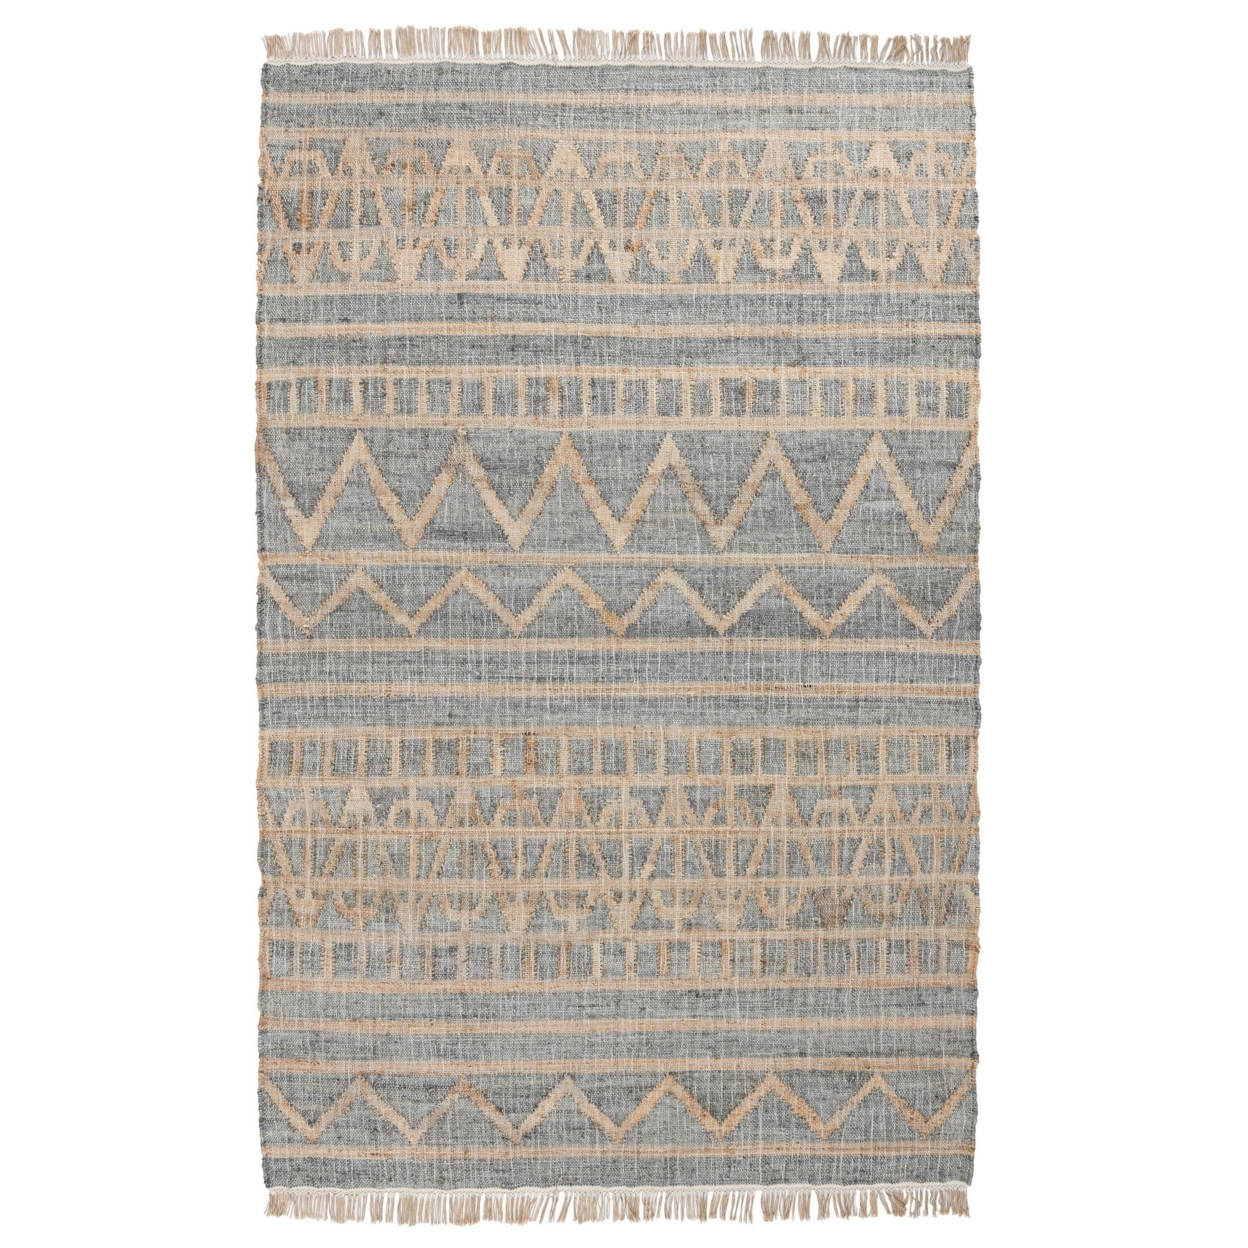 Myra 3 X 8 Area Rug, Soft Handwoven Moroccan Pattern, Brown And Blue Jute- Saltoro Sherpi